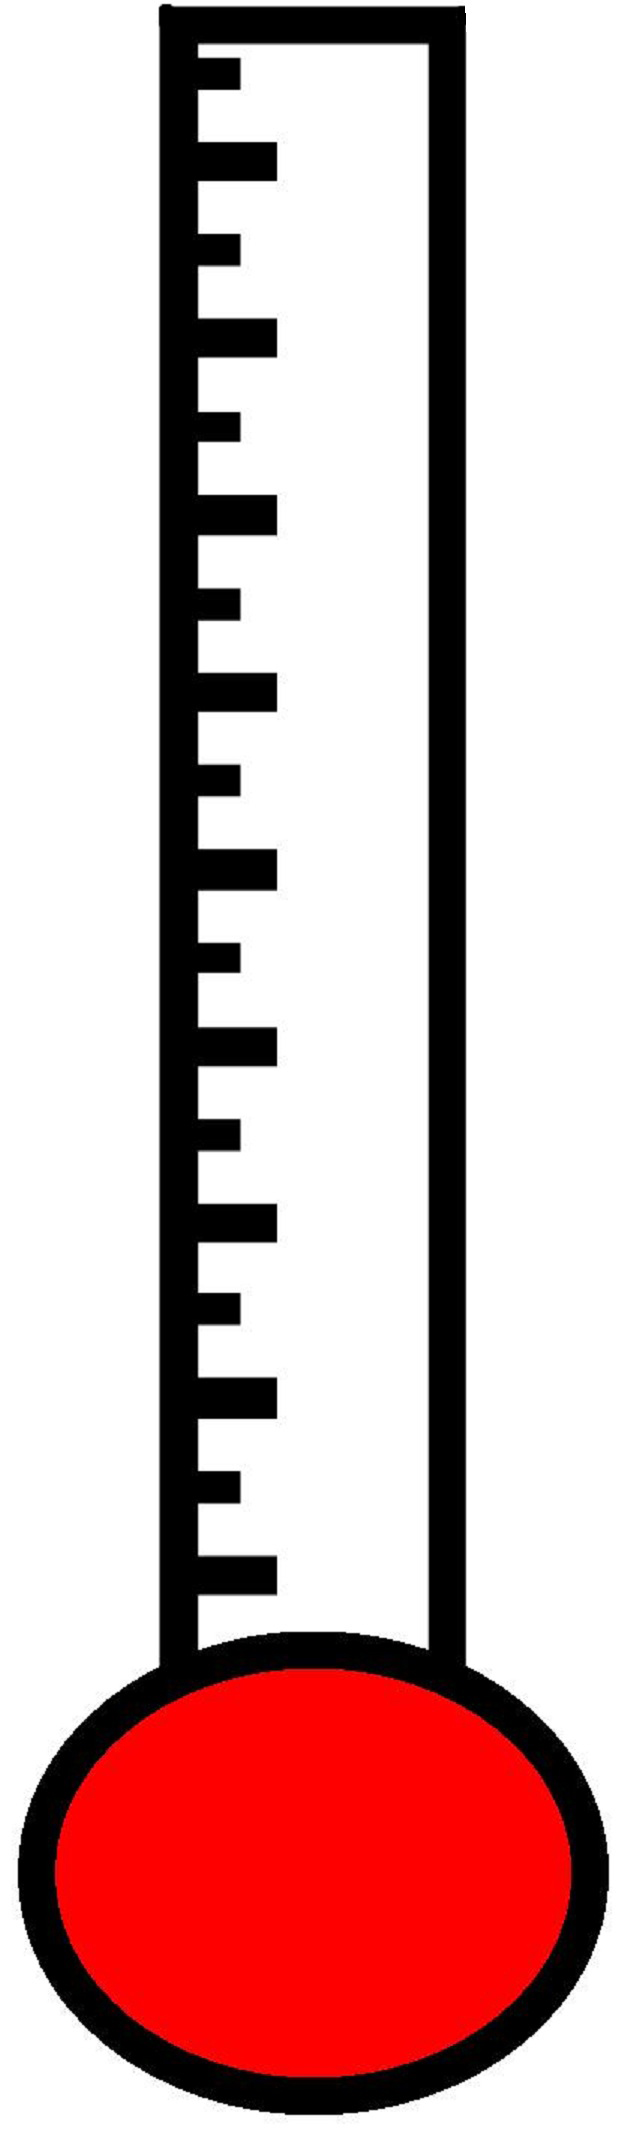 Printable Thermometer Goal Chart